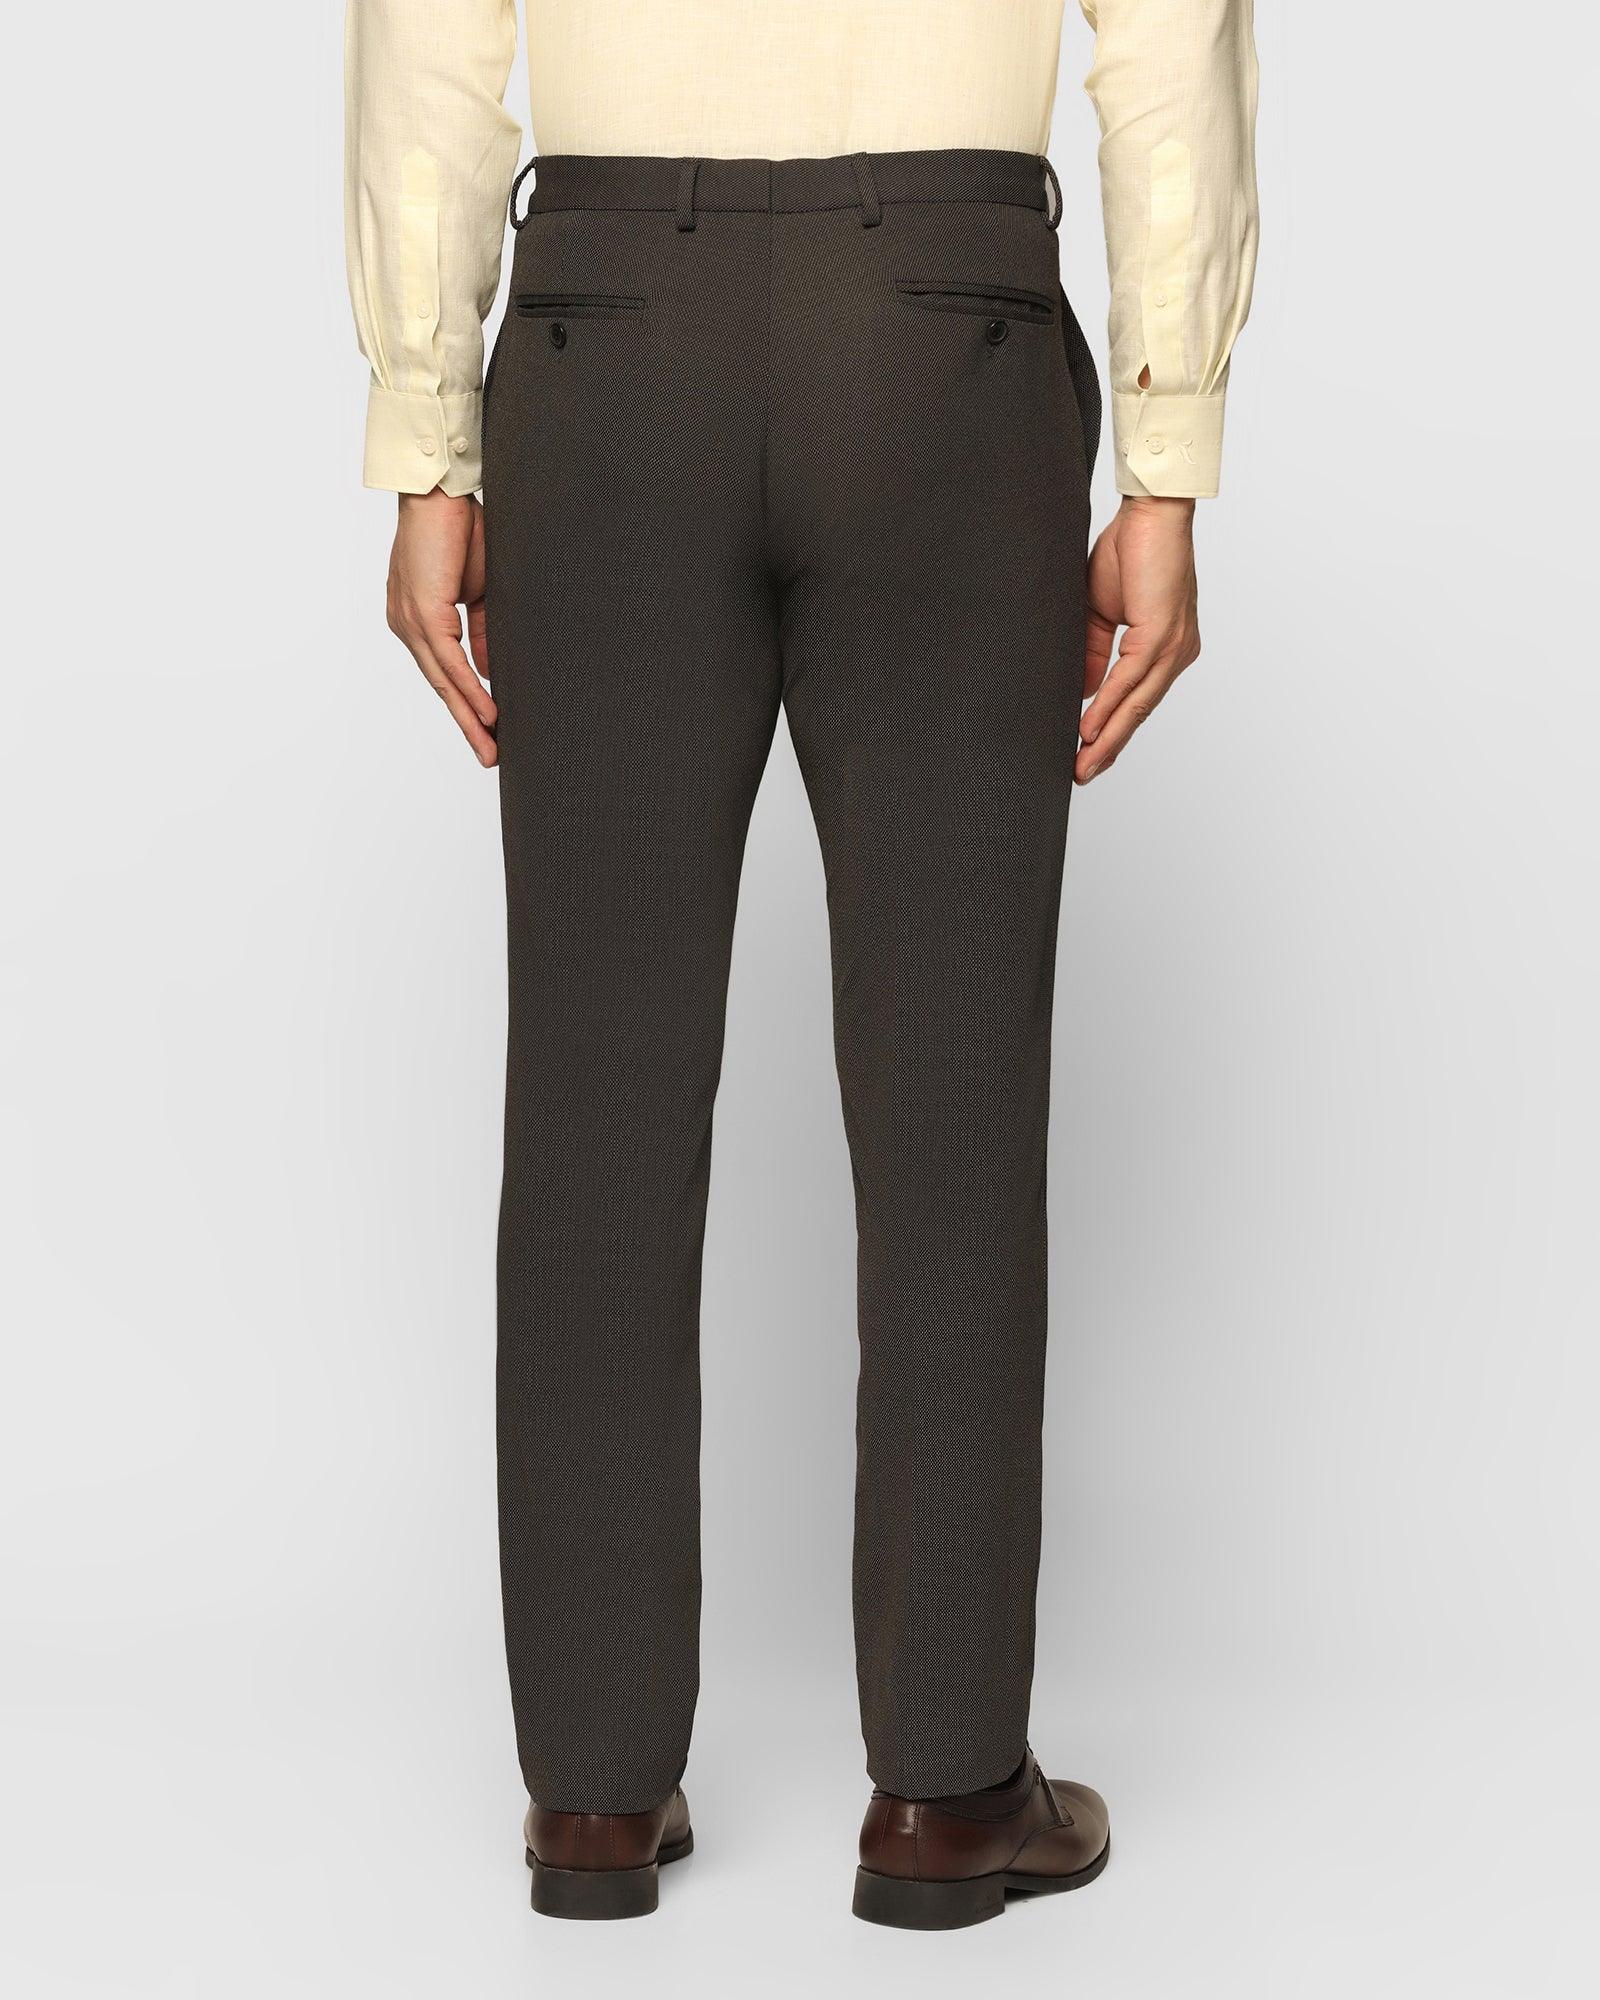 Slim Fit B-91 Formal Grey Textured Trouser - Roman